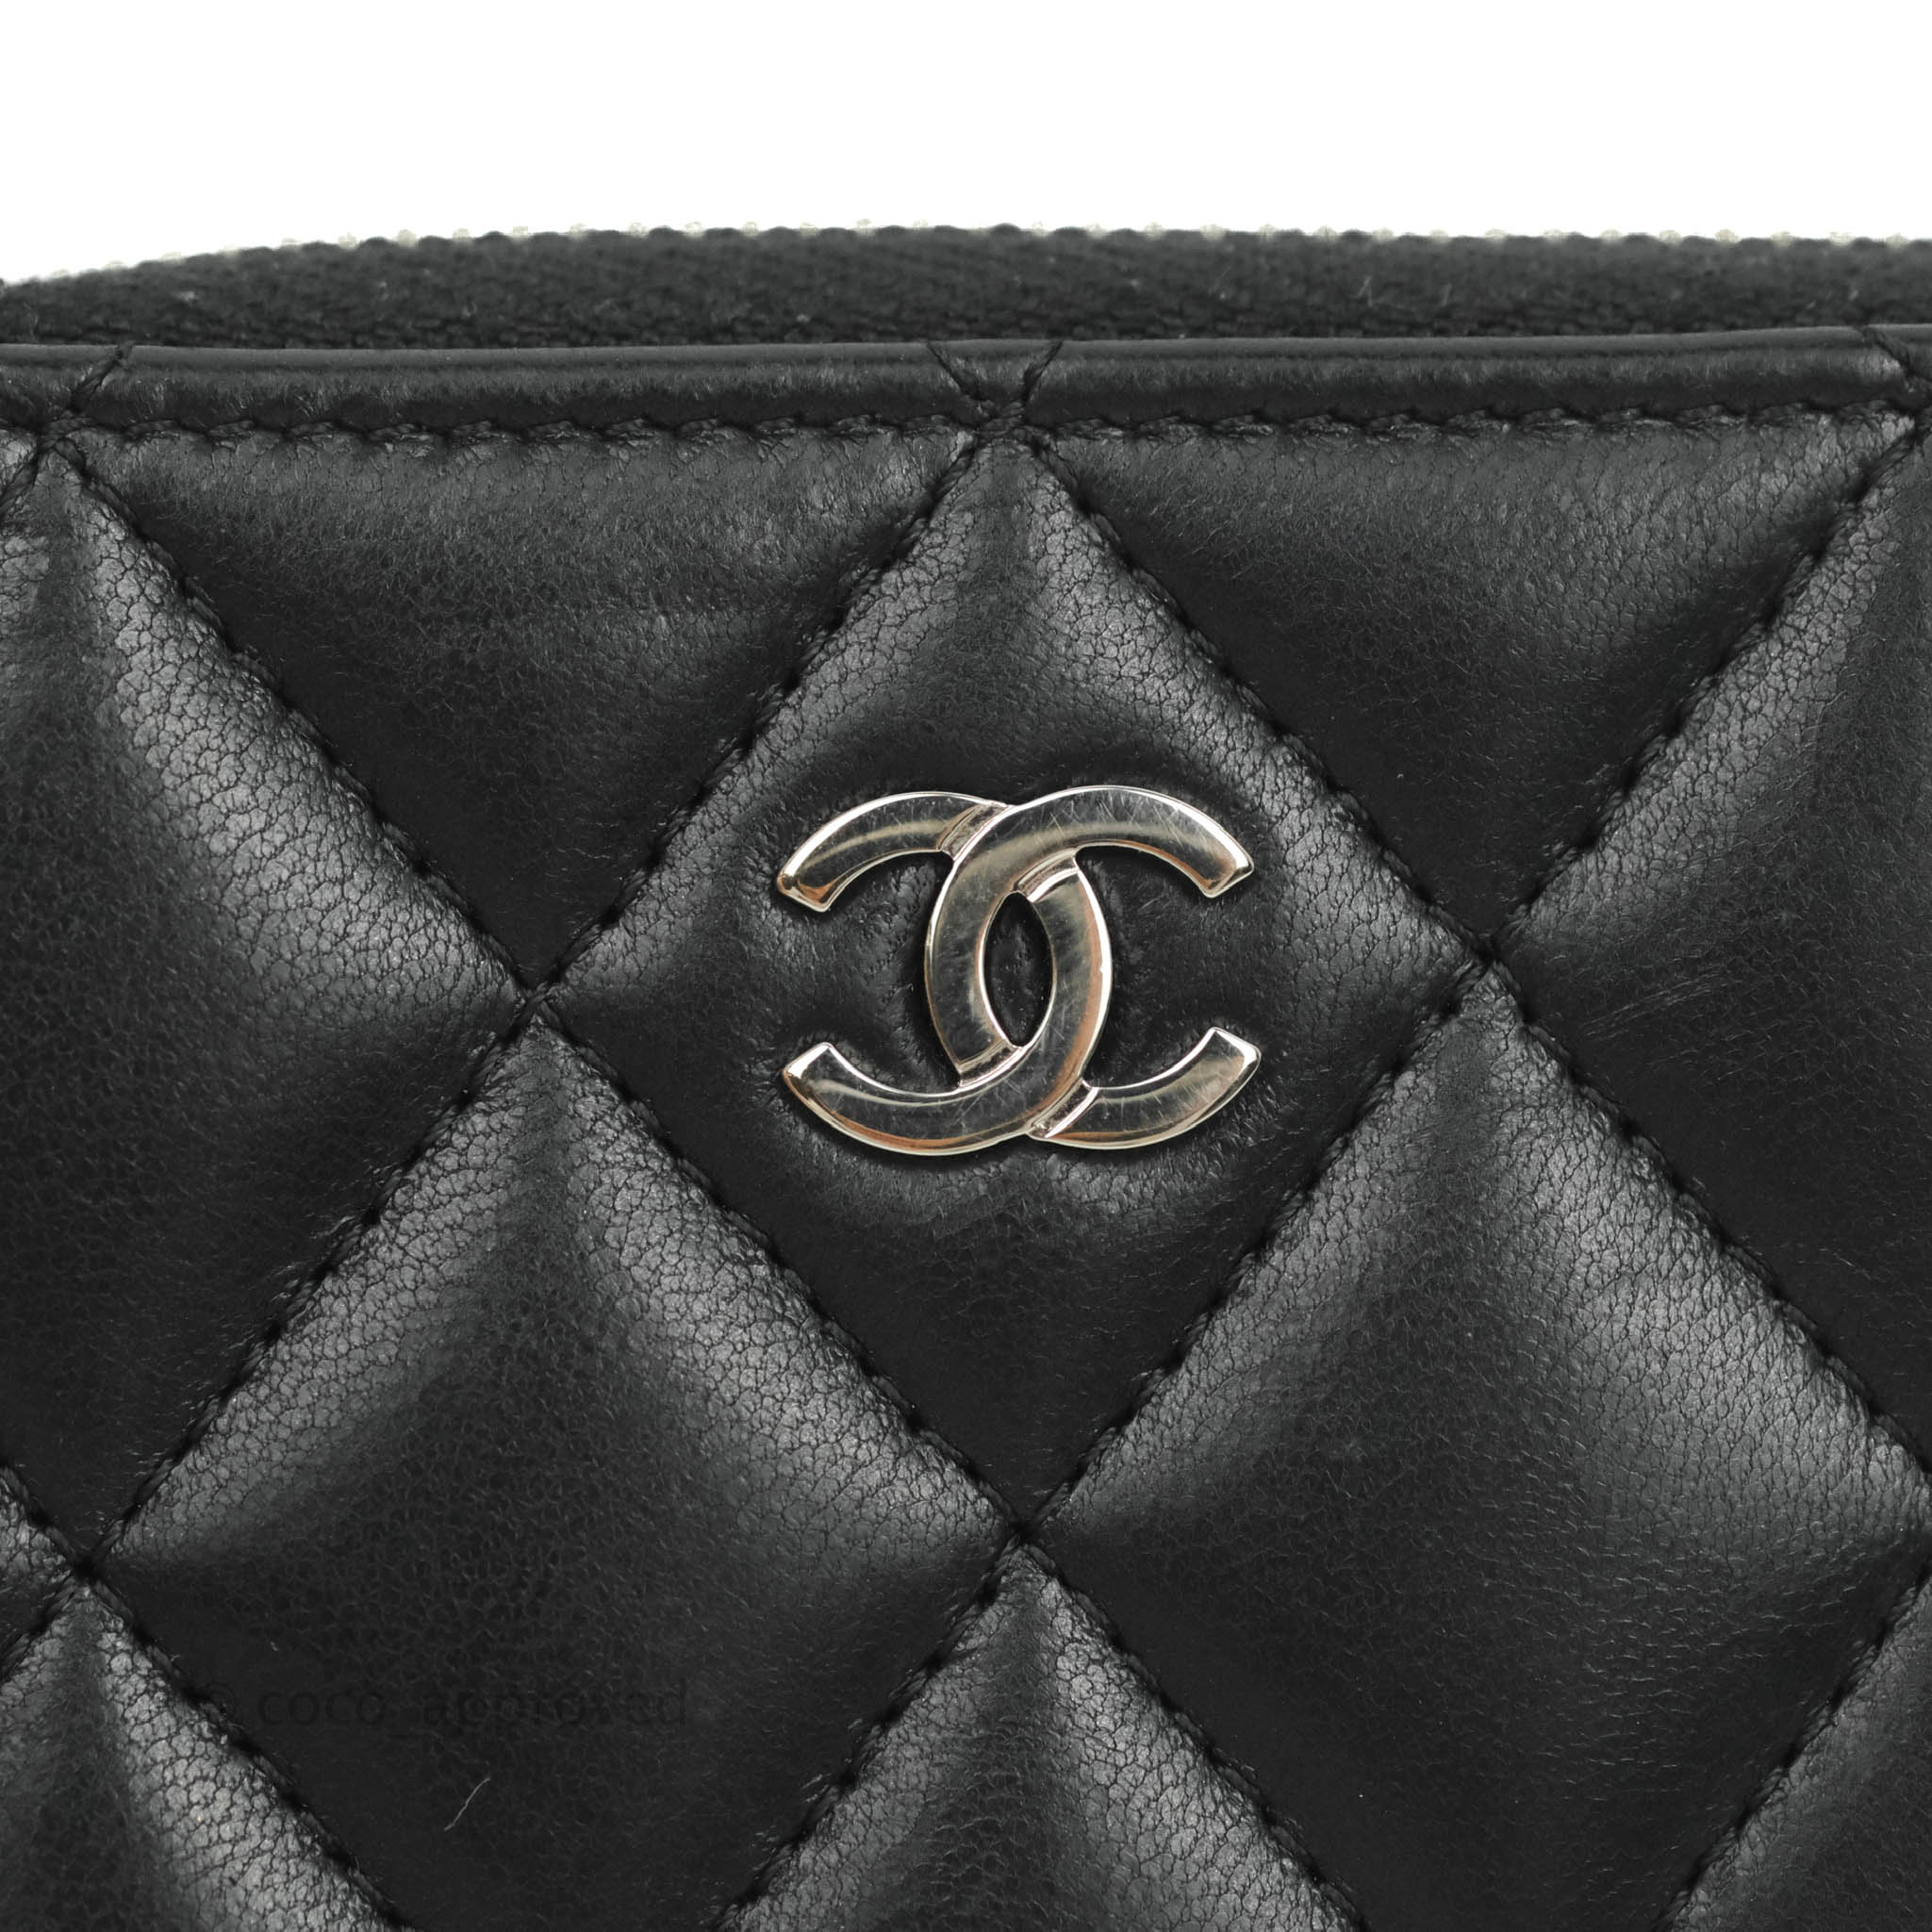 Chanel Classic Zipped Coin Purse Black Caviar Gold Hardware – Coco Approved  Studio